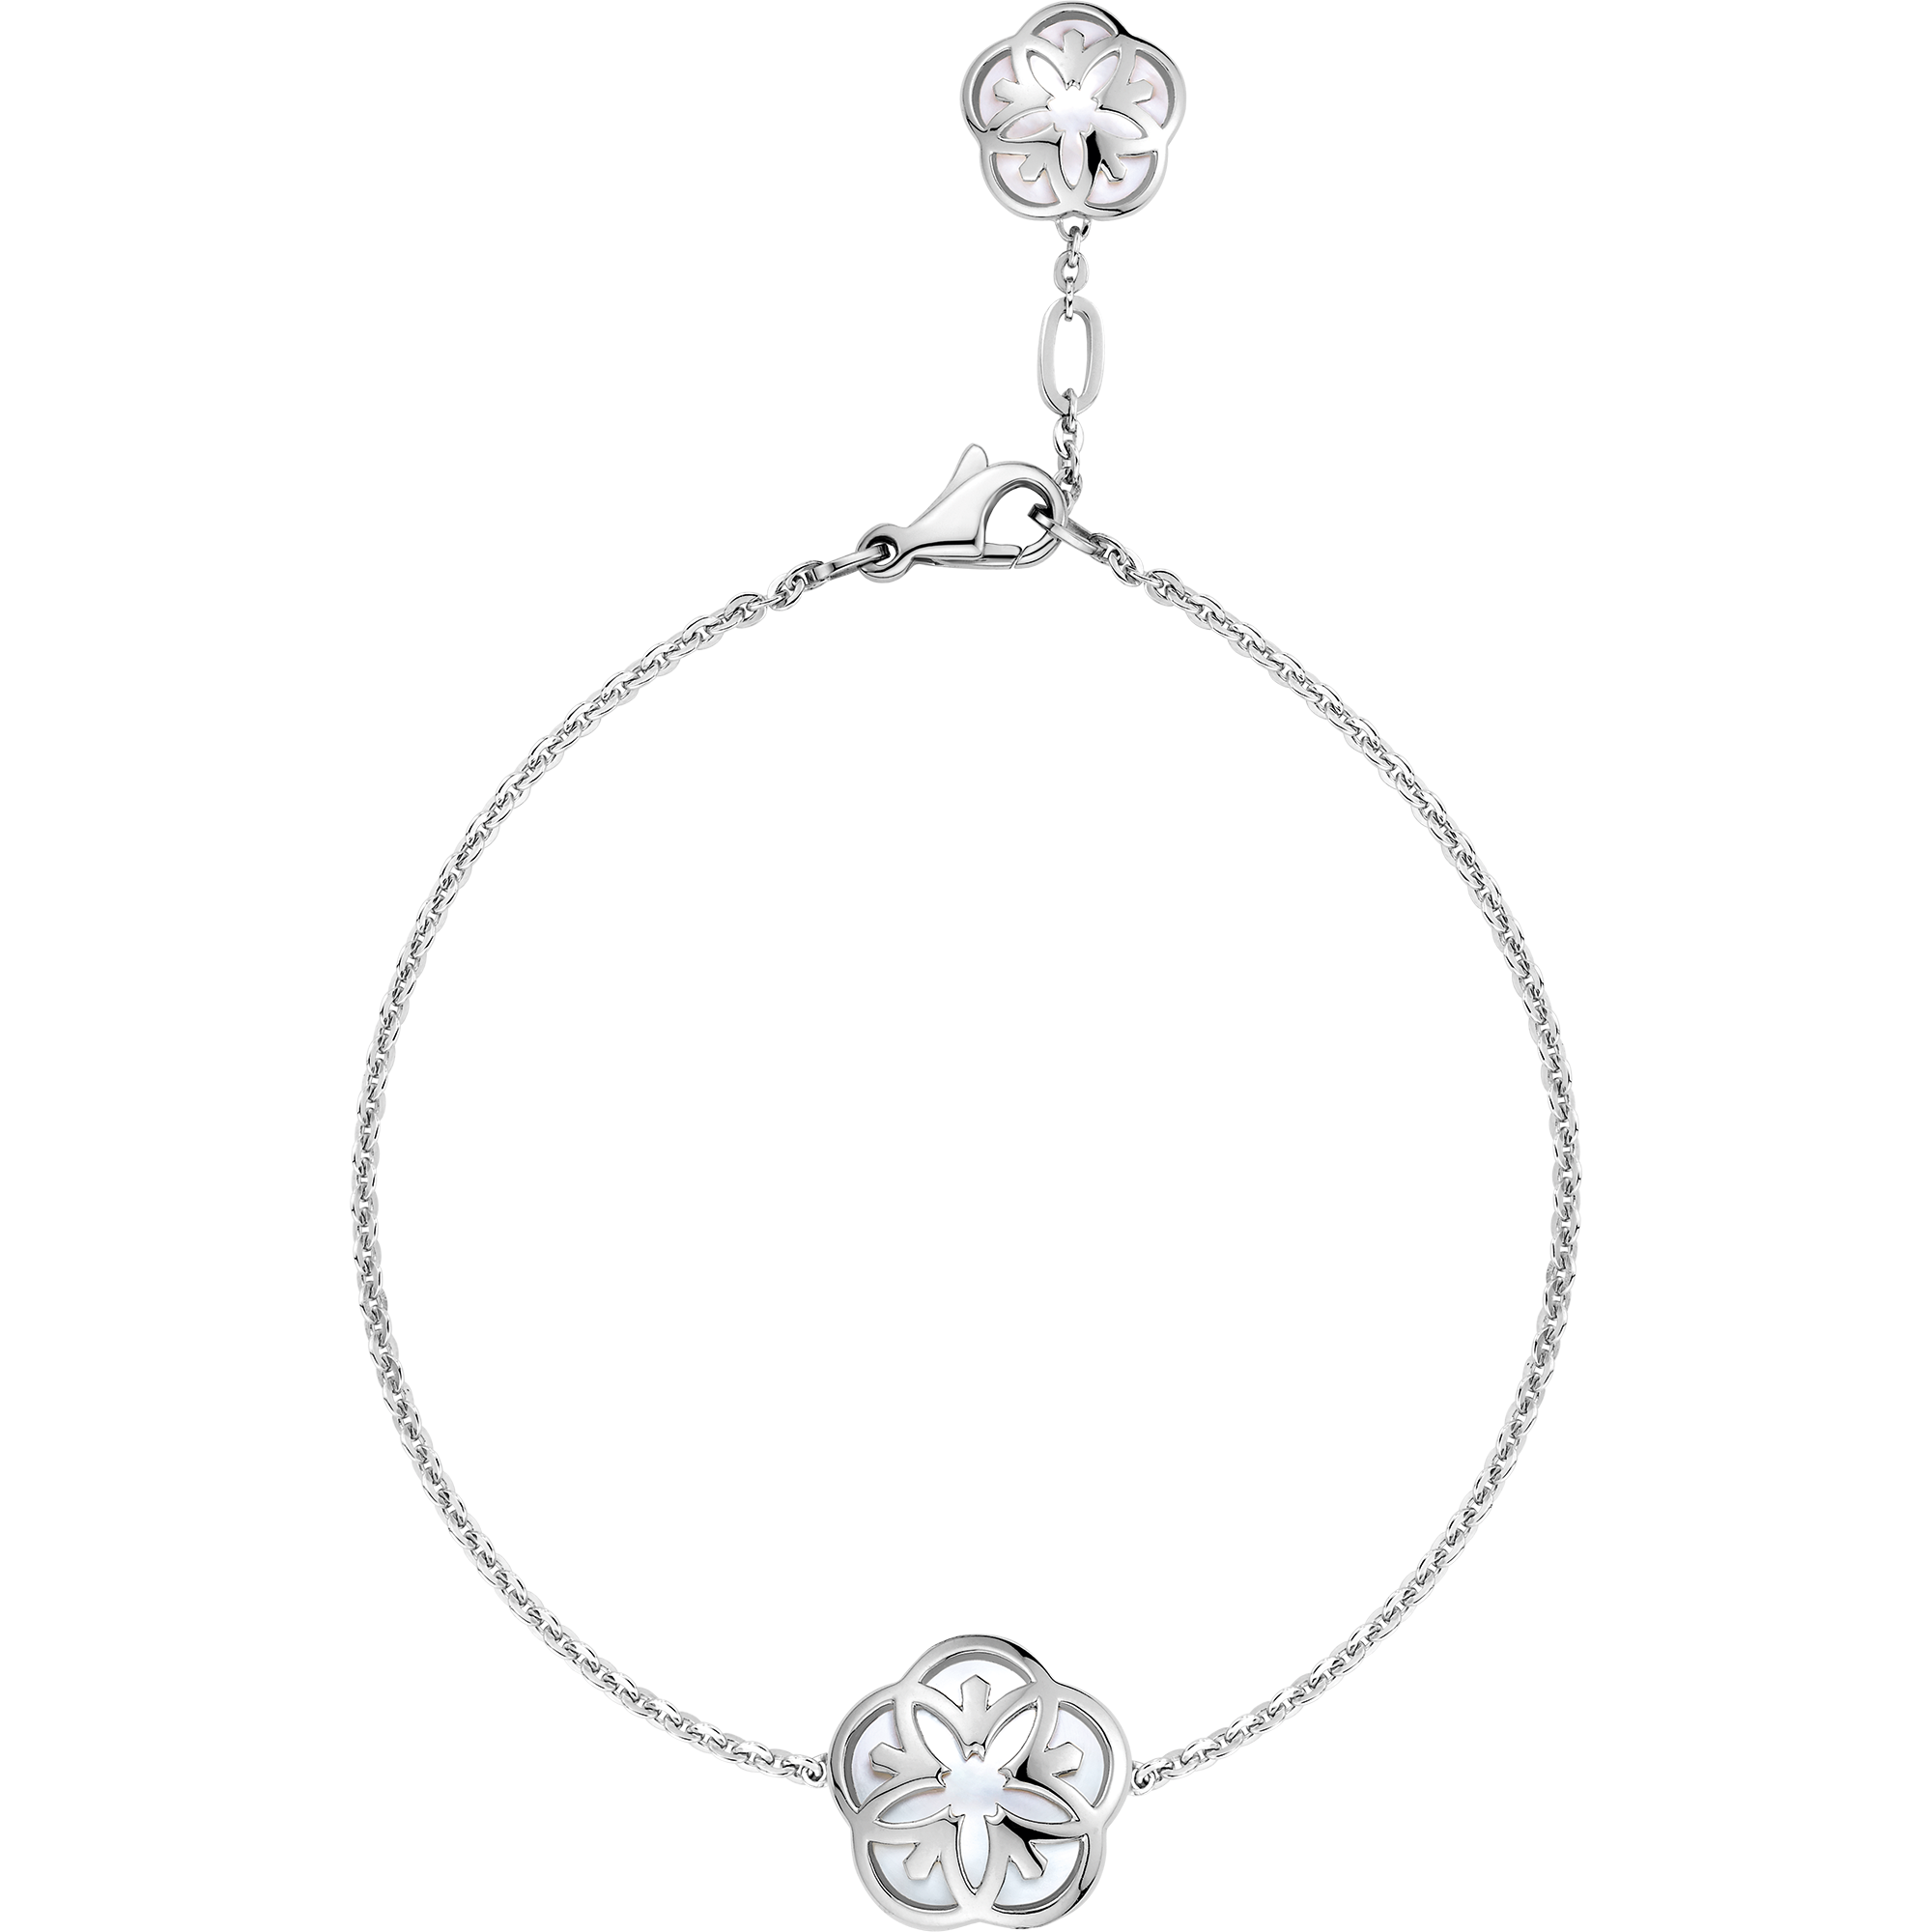 Omega Flower Bracelet, 18K white gold, Mother-of-pearl cabochon - B603BC0700405